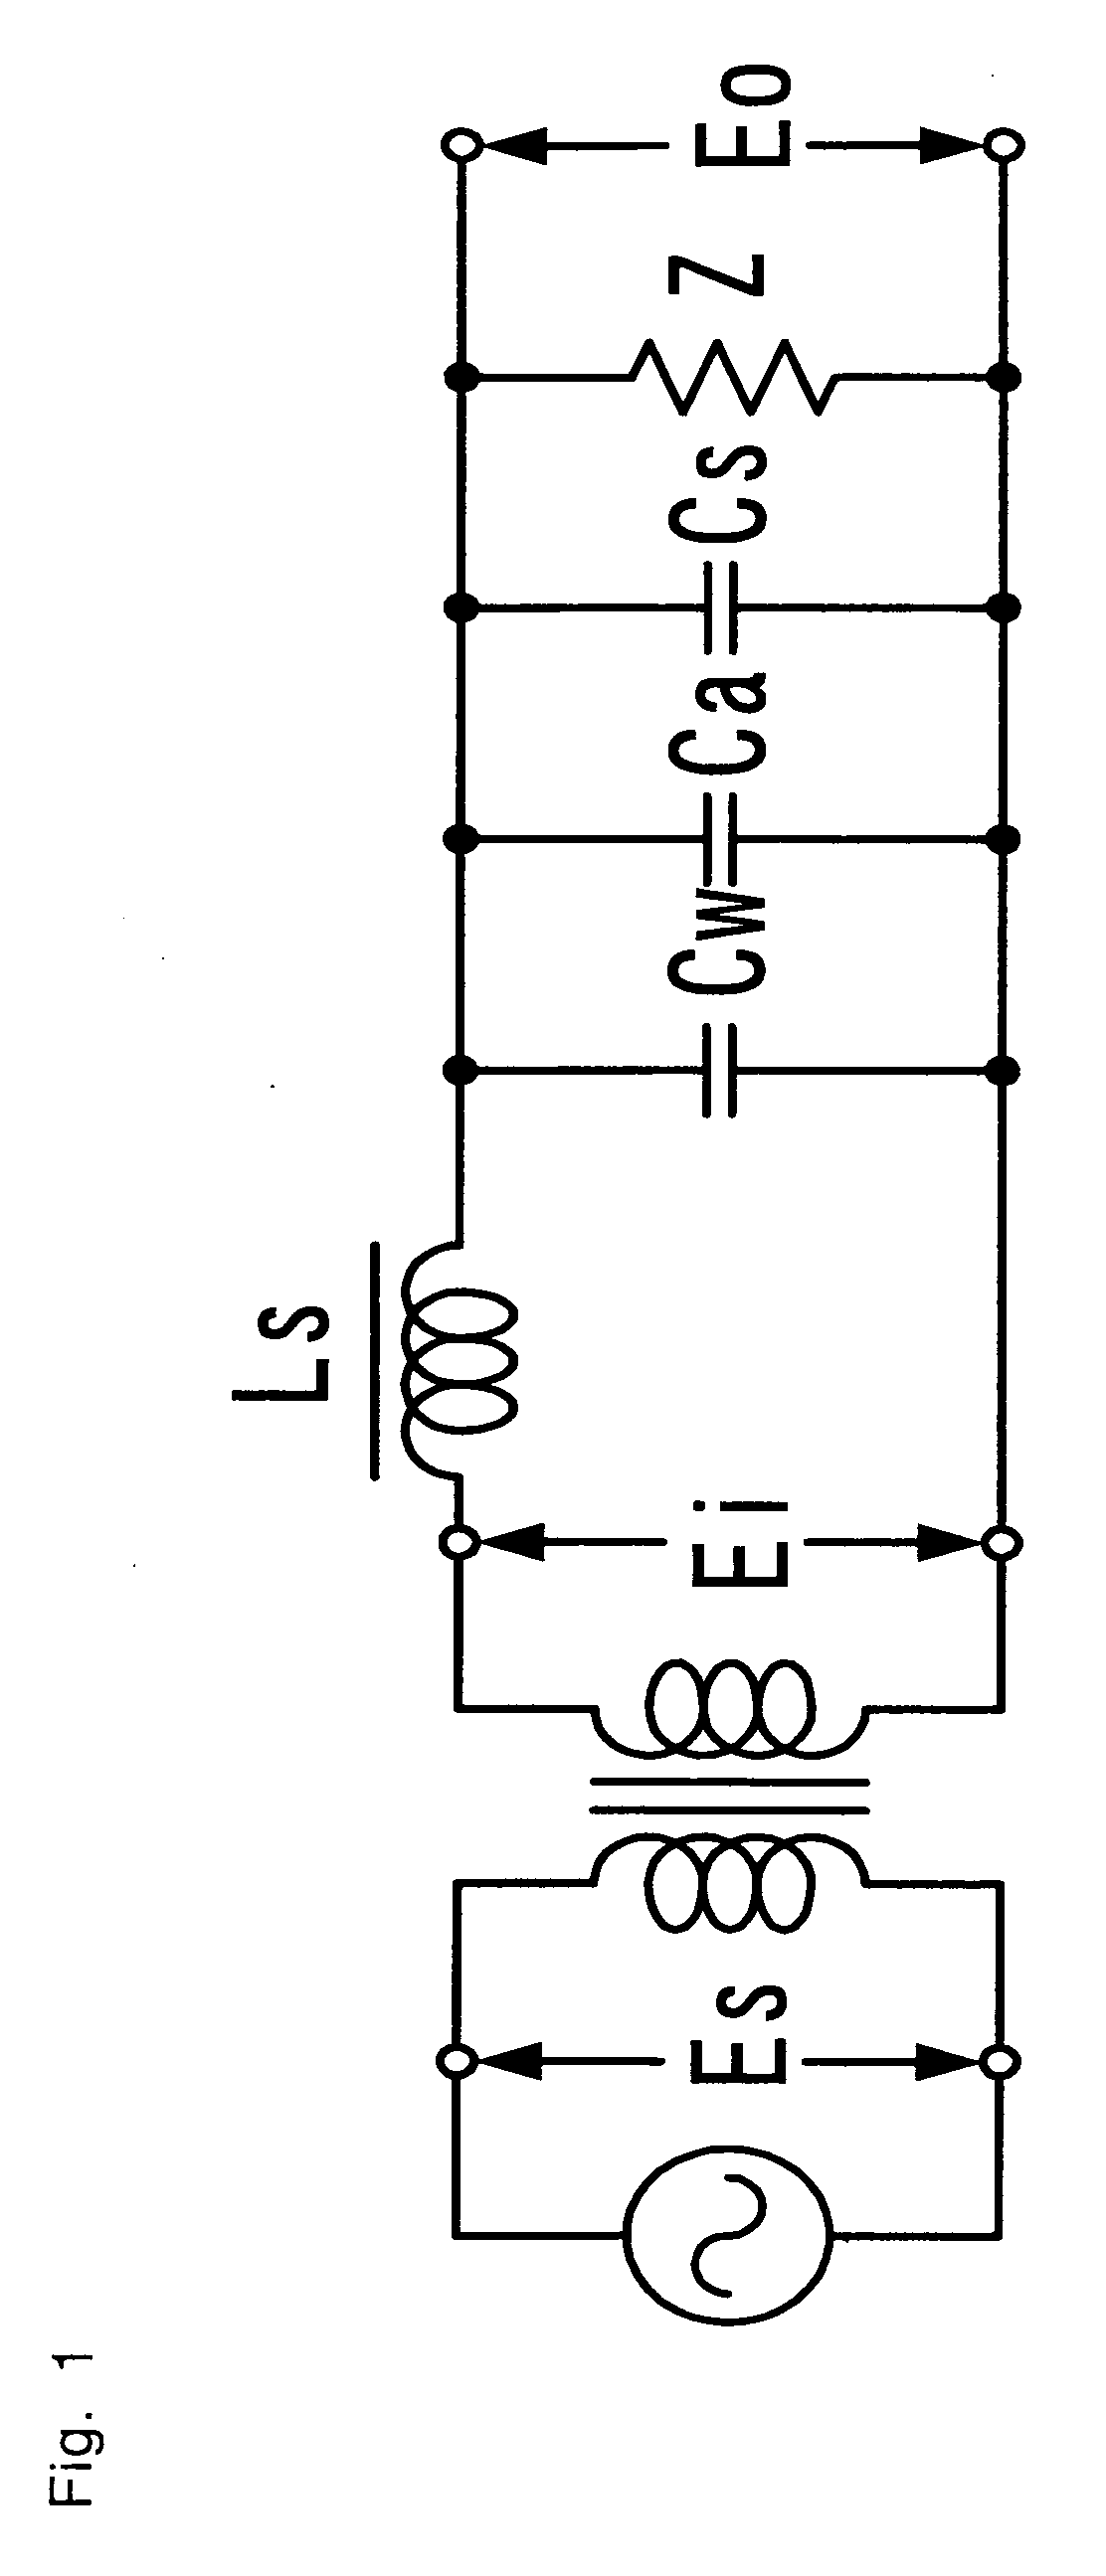 Current-mode resonant inverter circuit